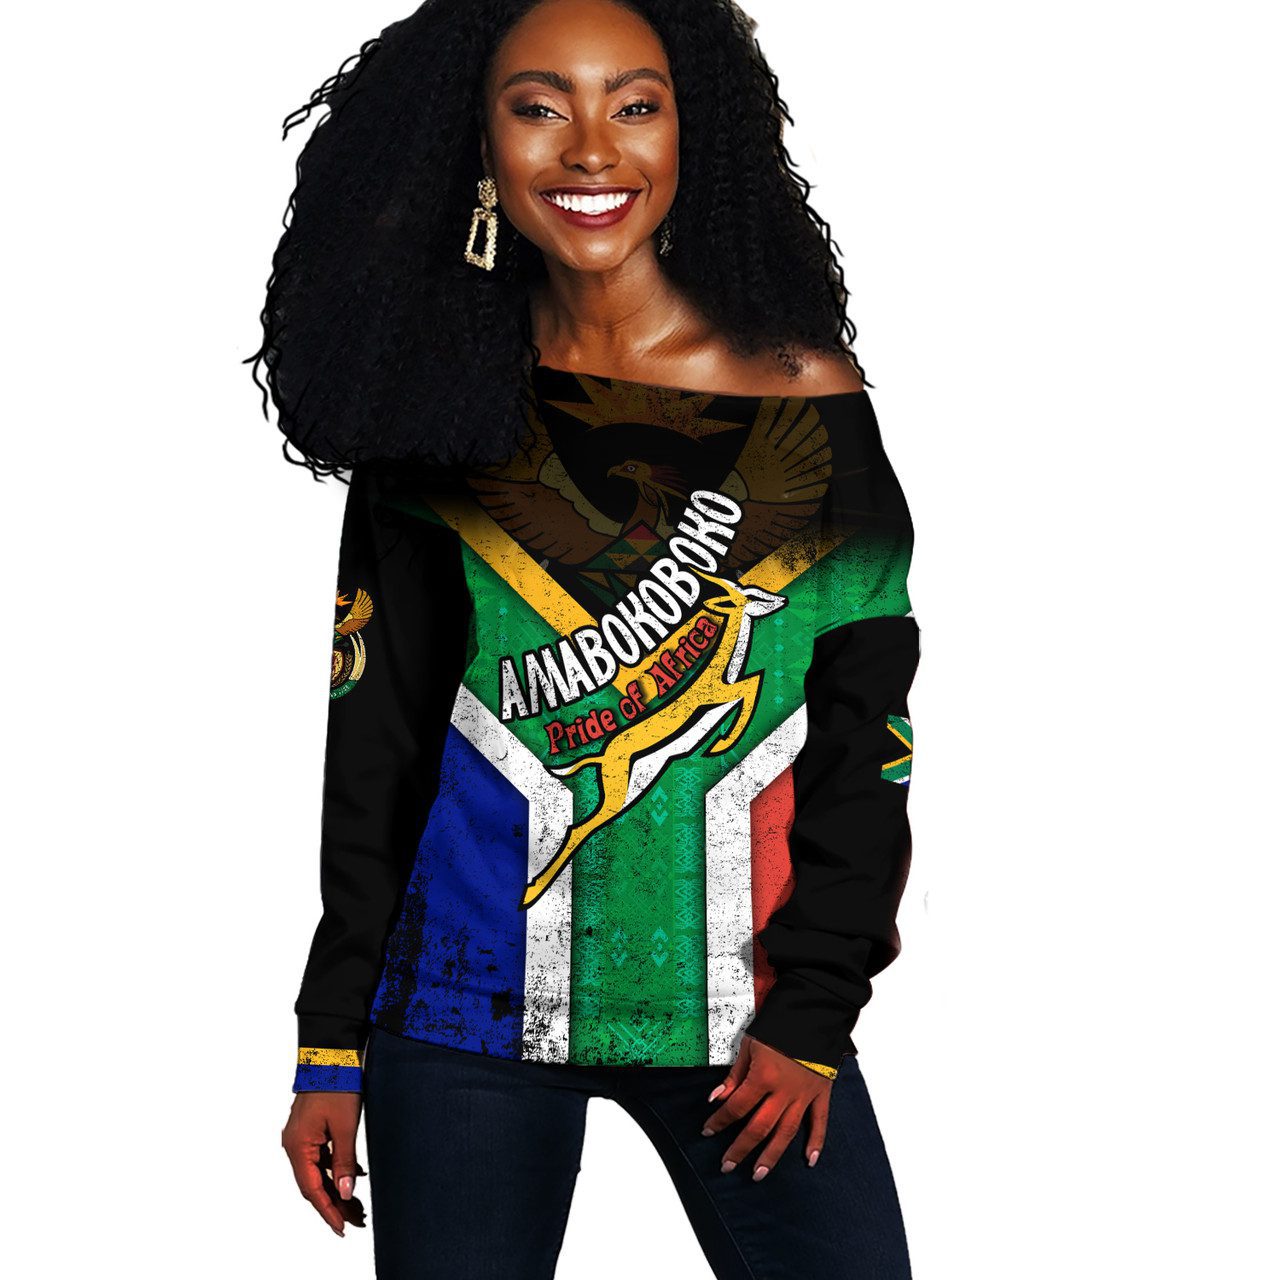 South Africa Off Shoulder Sweatshirt Amabokoboko Pride Of Africa